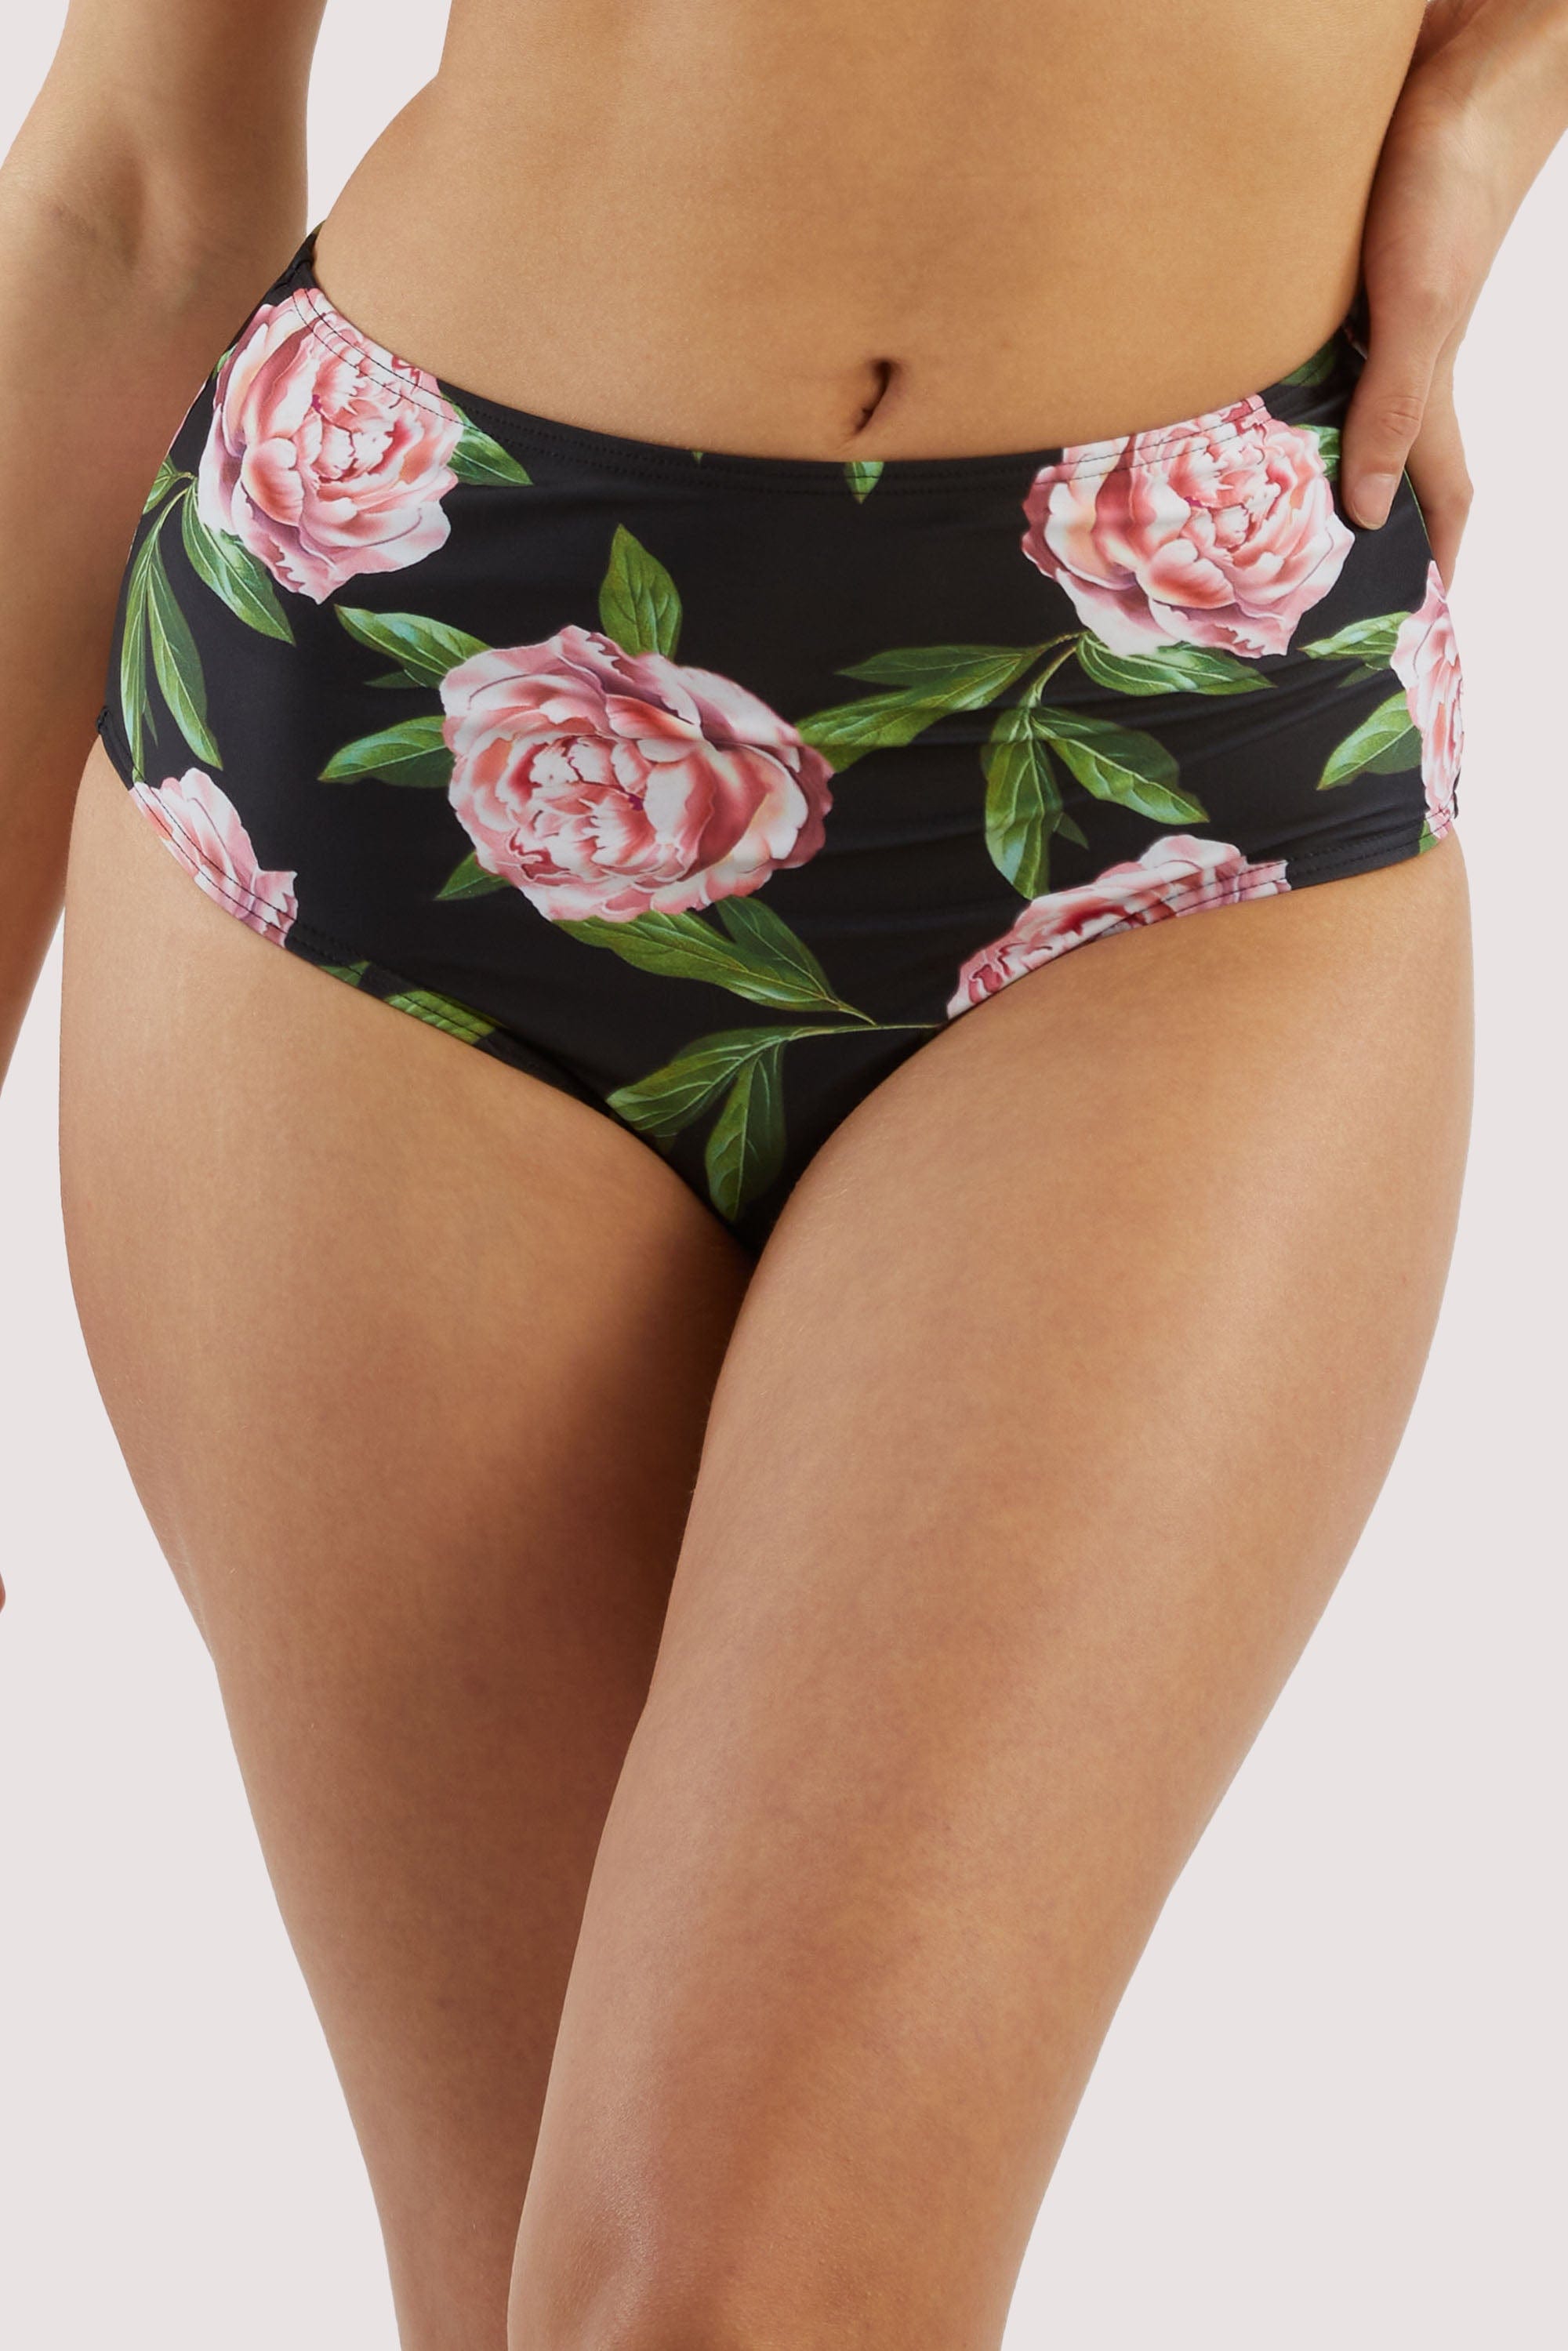 Claudette Roses High Waisted Bikini Brief UK 14 / US 10